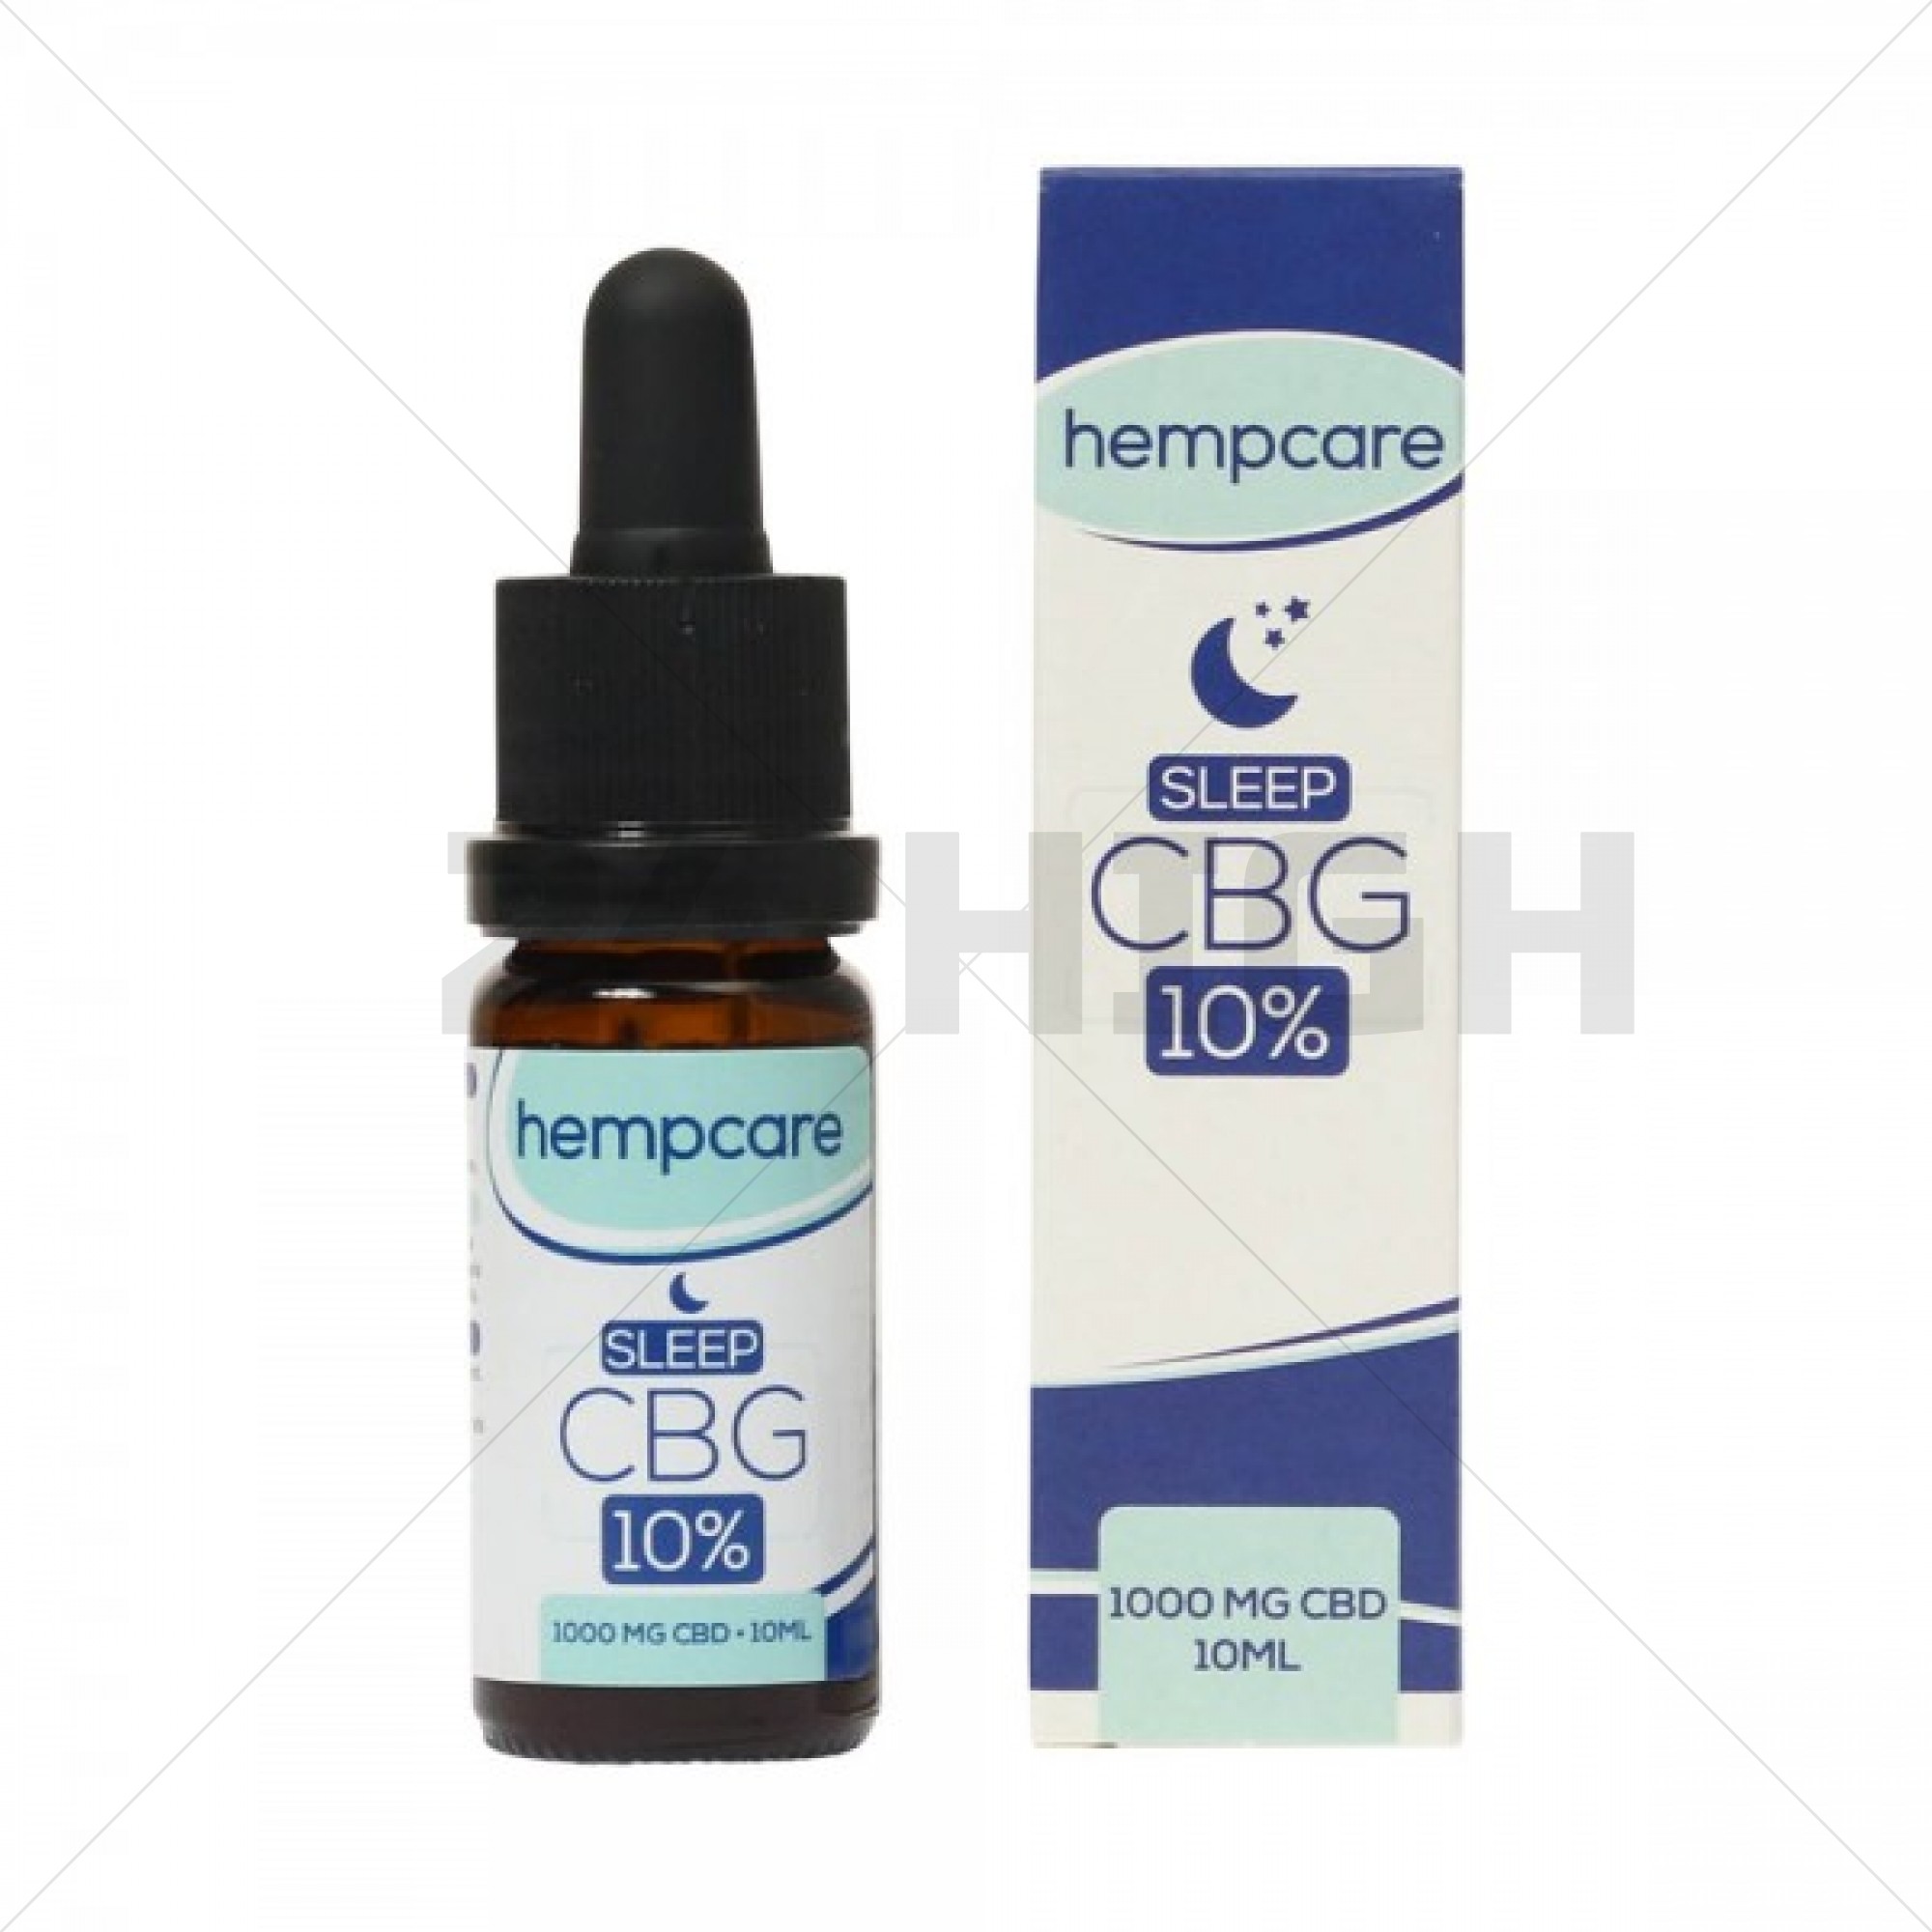 HempCare Sleep huile de CBD - 10% CBD (1000mg)